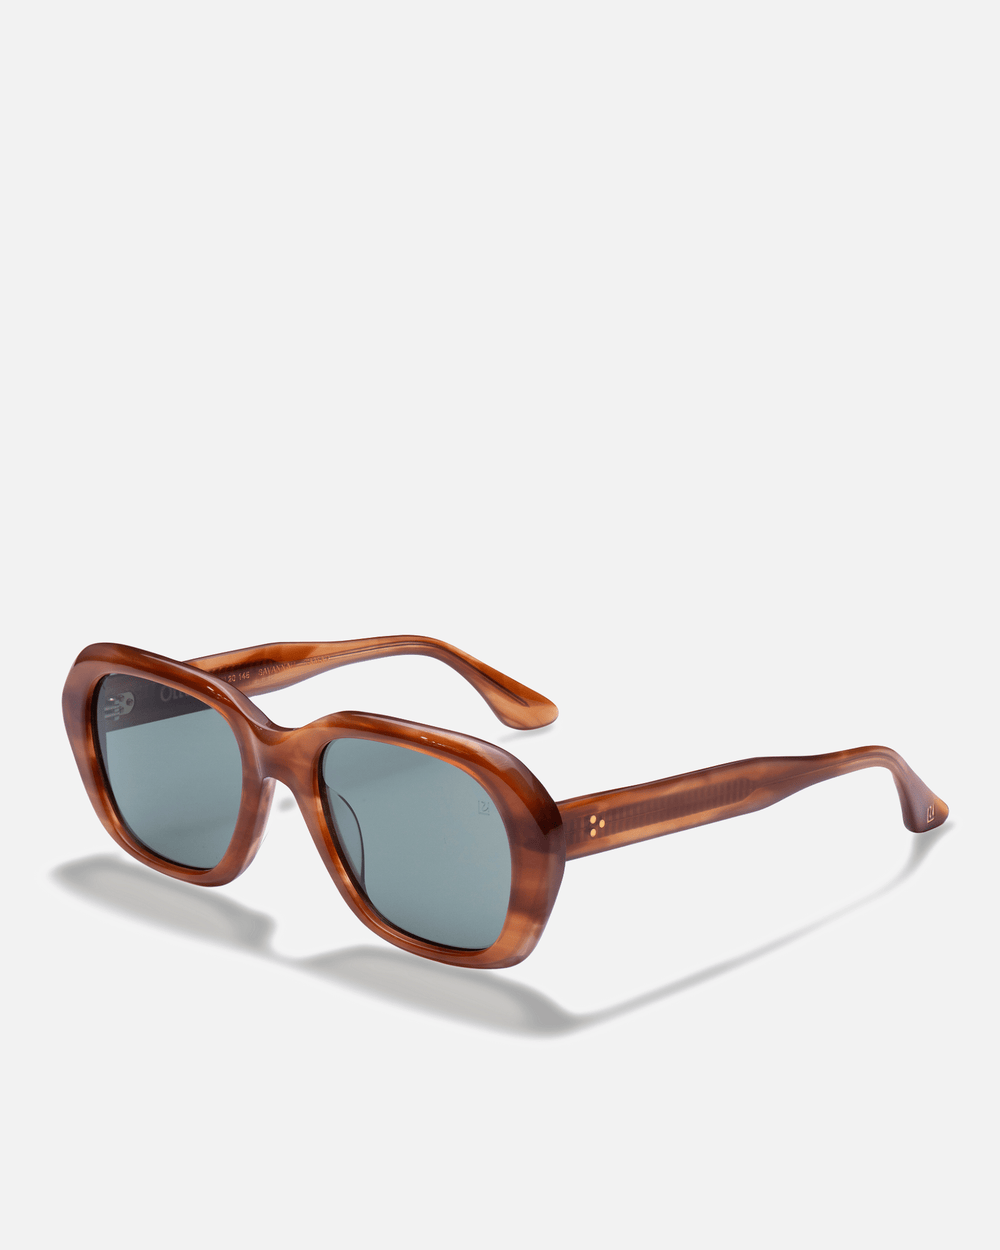 TAMAR Bio-Acetate Round Frame Sunglasses for Men & Women | Savannah | Sunnies Collection | OLLU